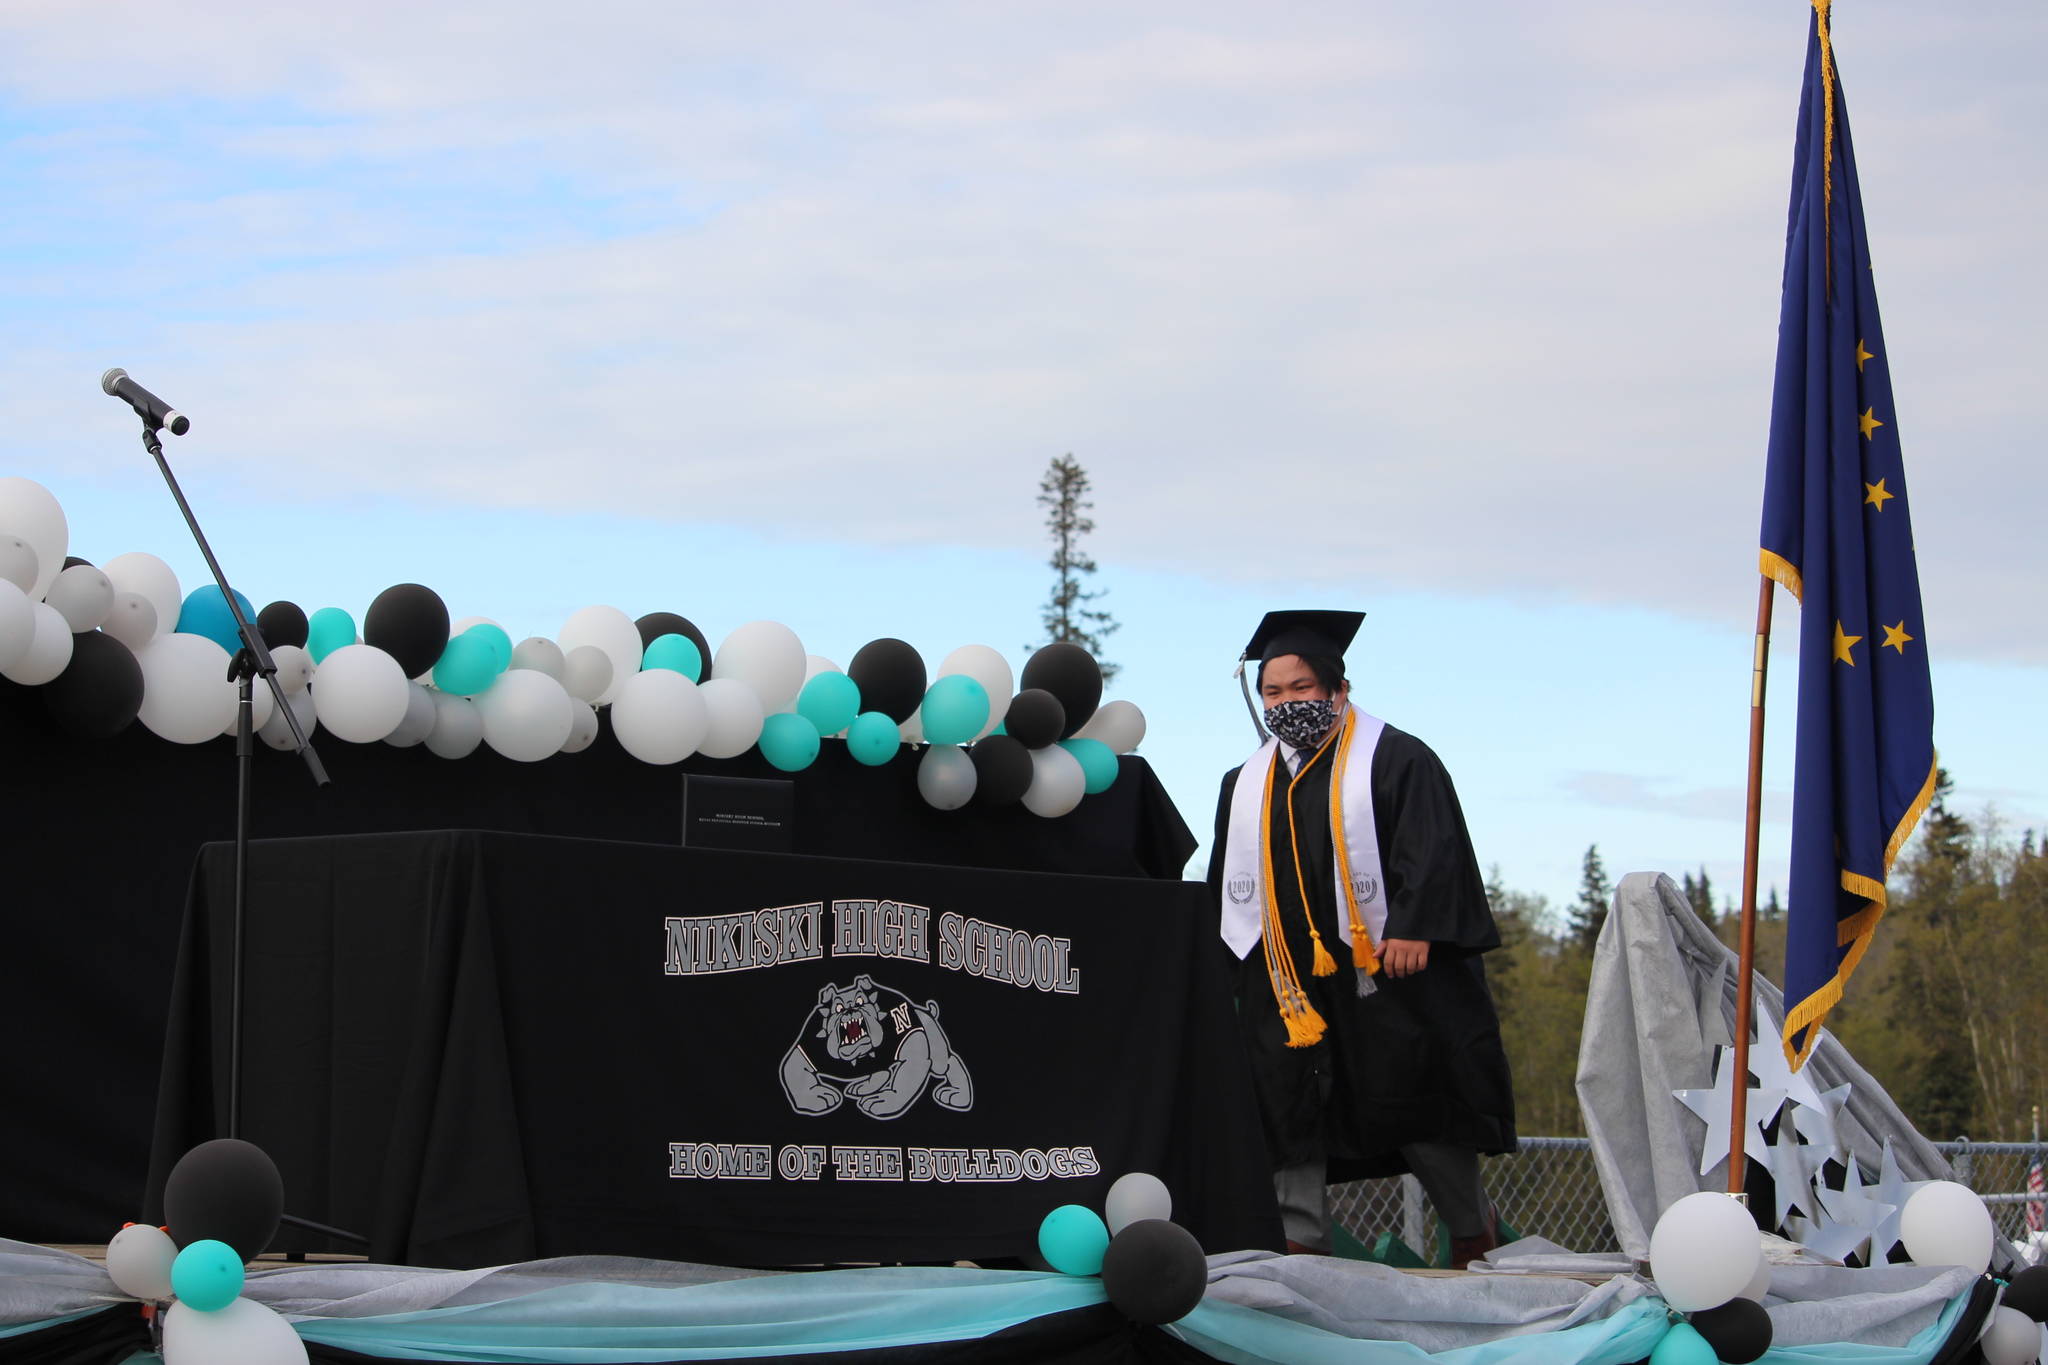 Senior Hamilton “Hammie” Cox walks onstage to receive his diploma during the 2020 Nikiski High School Graduation Commencement Ceremony in Nikiski, Alaska on May 19, 2020. (Photo by Brian Mazurek/Peninsula Clarion)